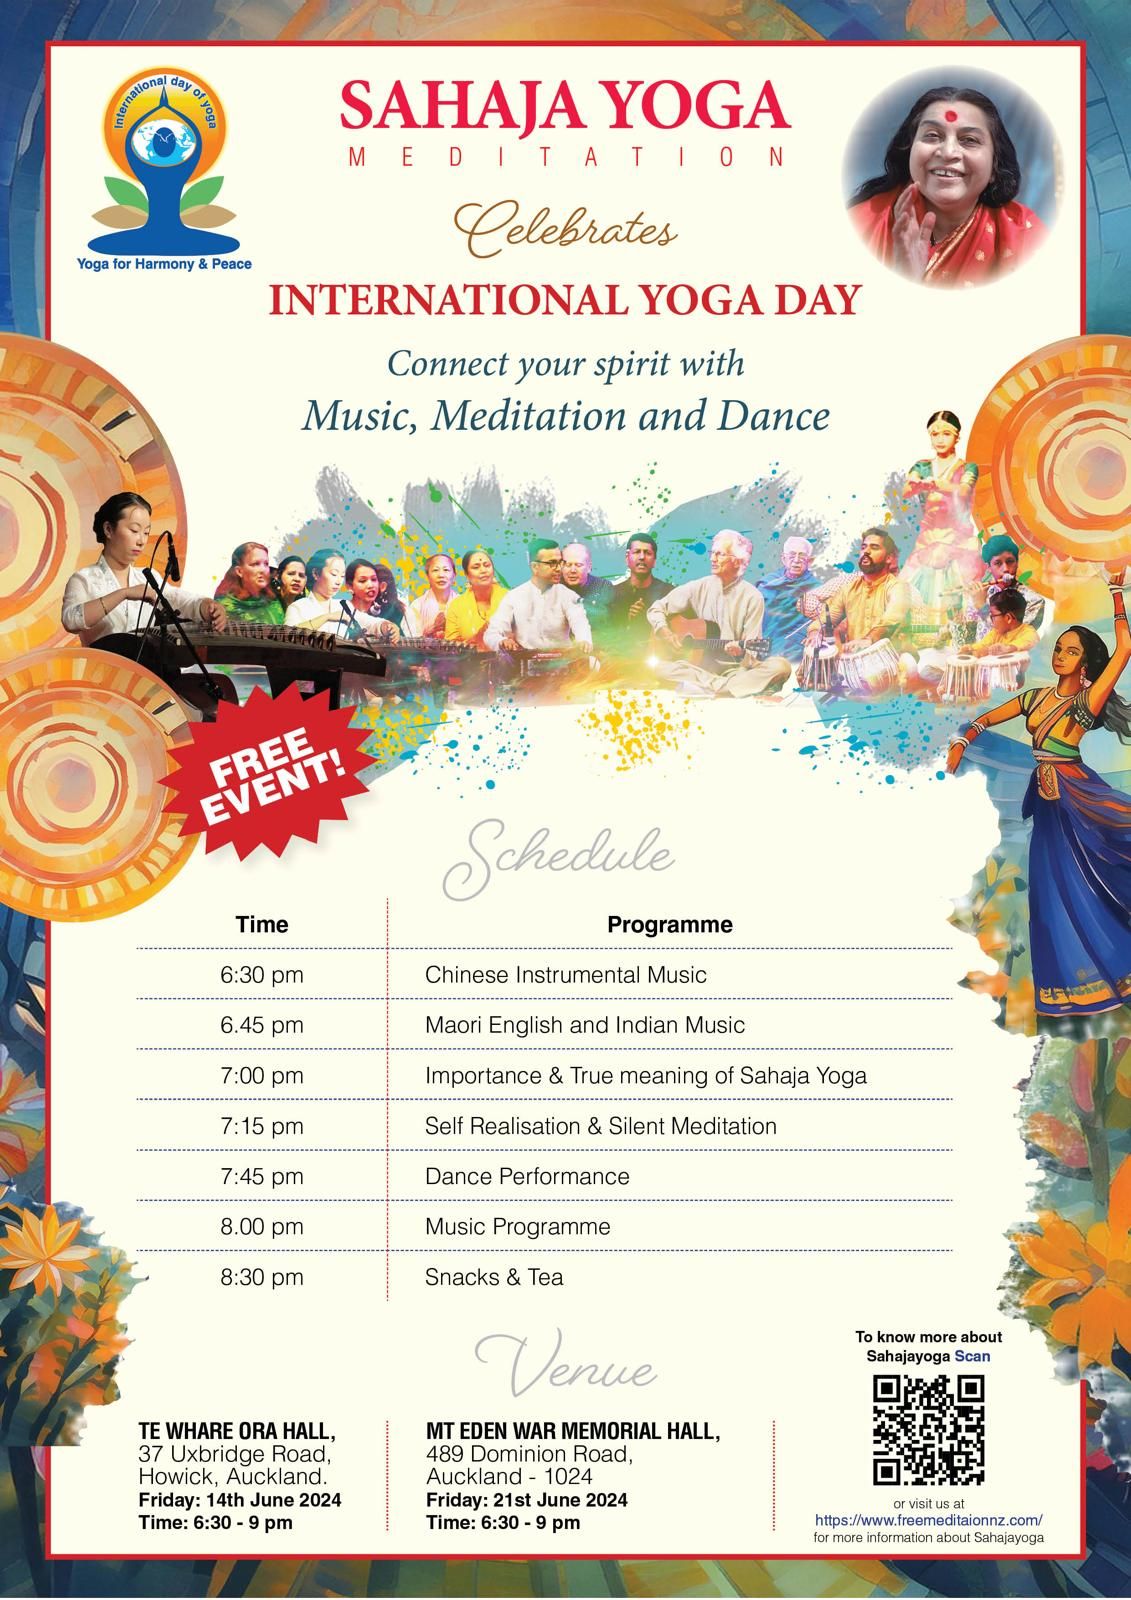 Celebrate International Yoga Day 2024 with Sahaja Yoga meditation